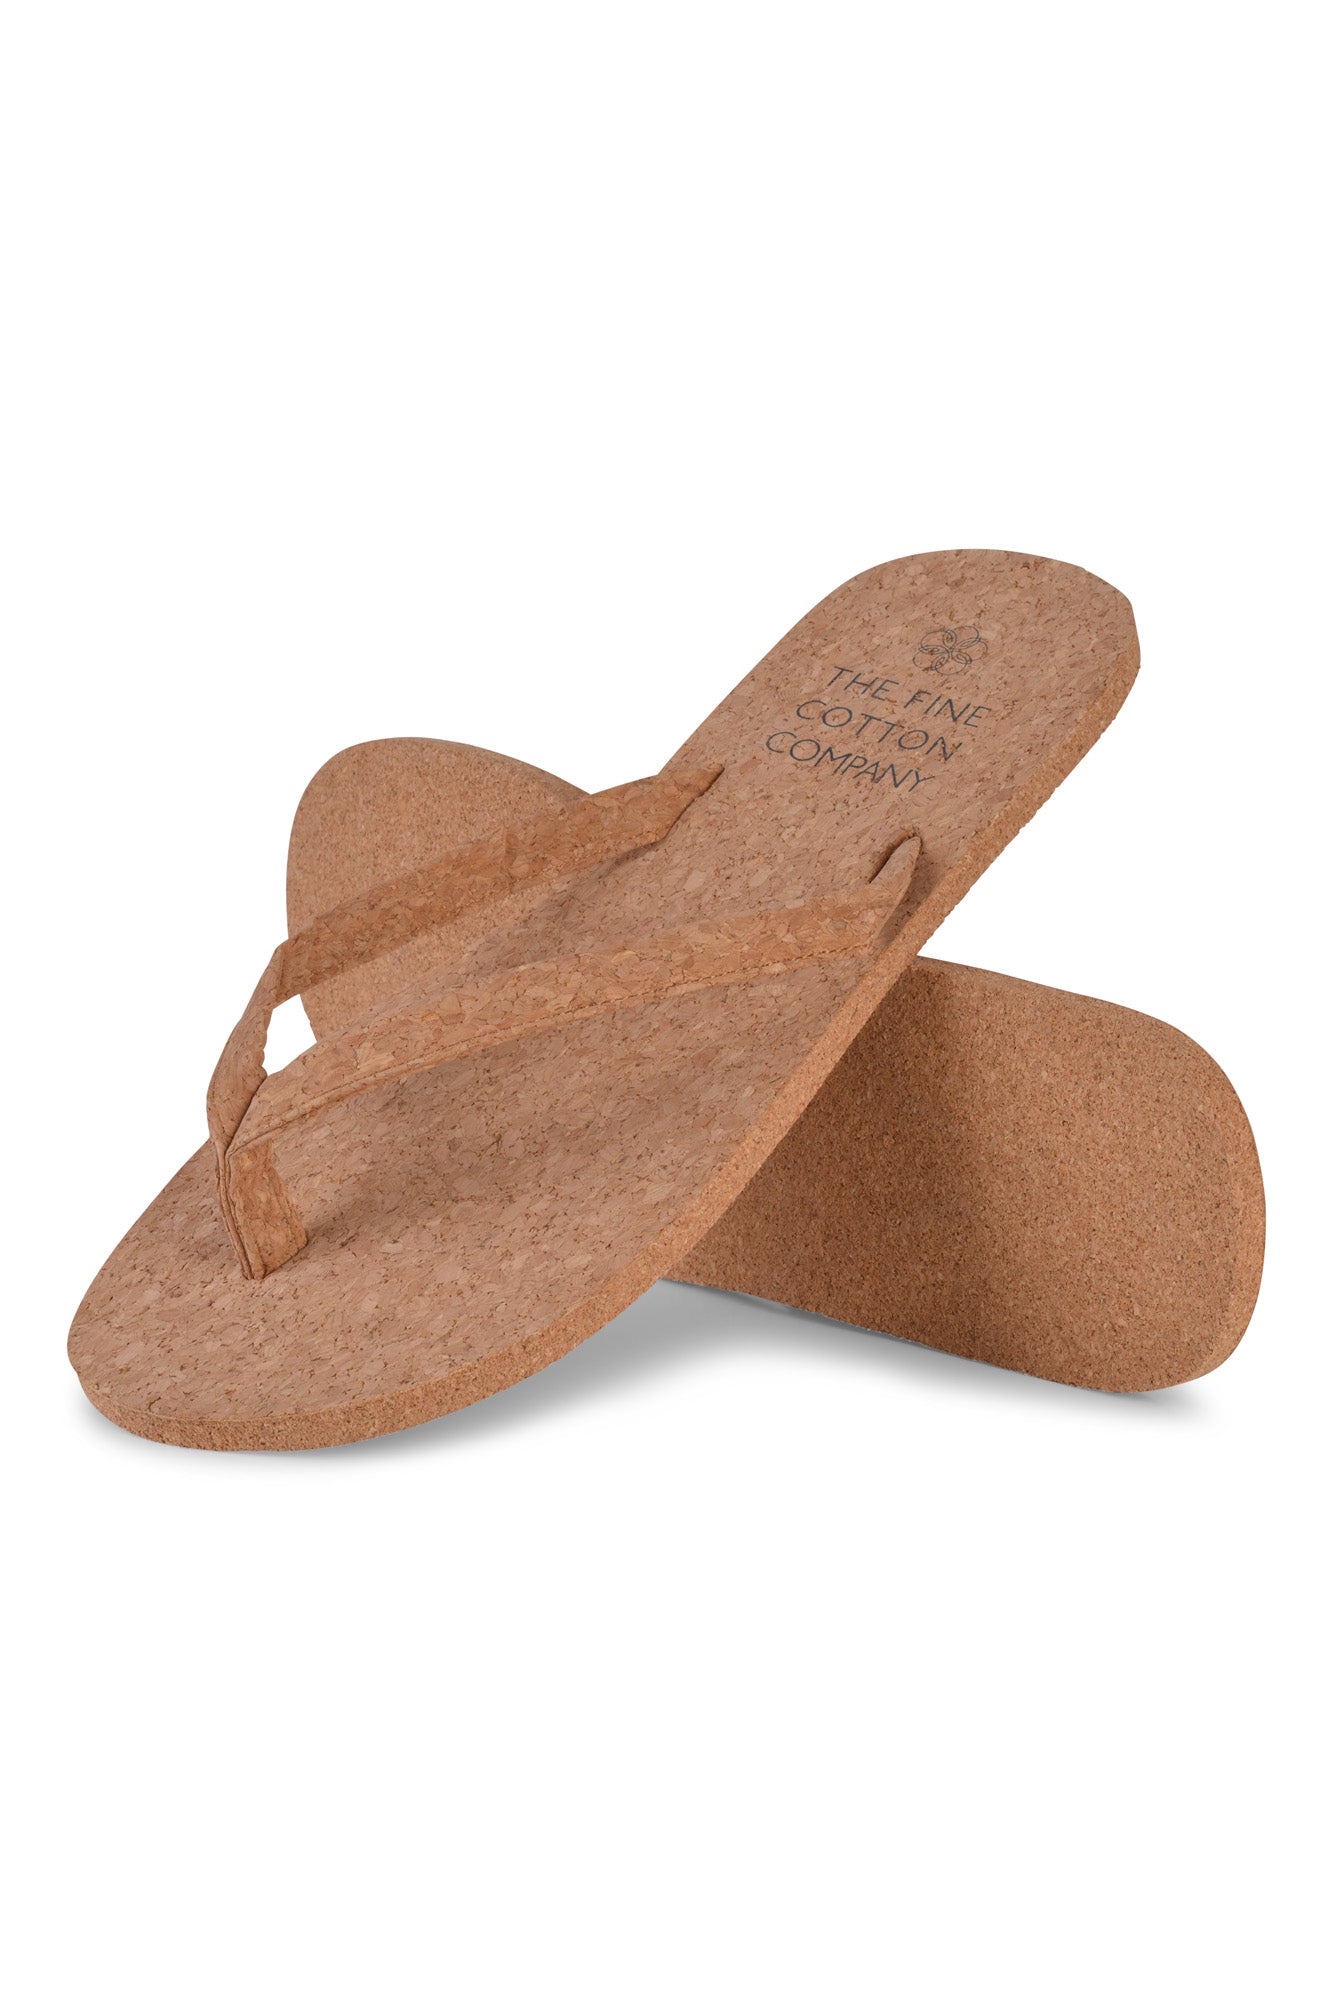 Cork Flip Flops -  Eco Friendly, Biodegradable - Pack of 100